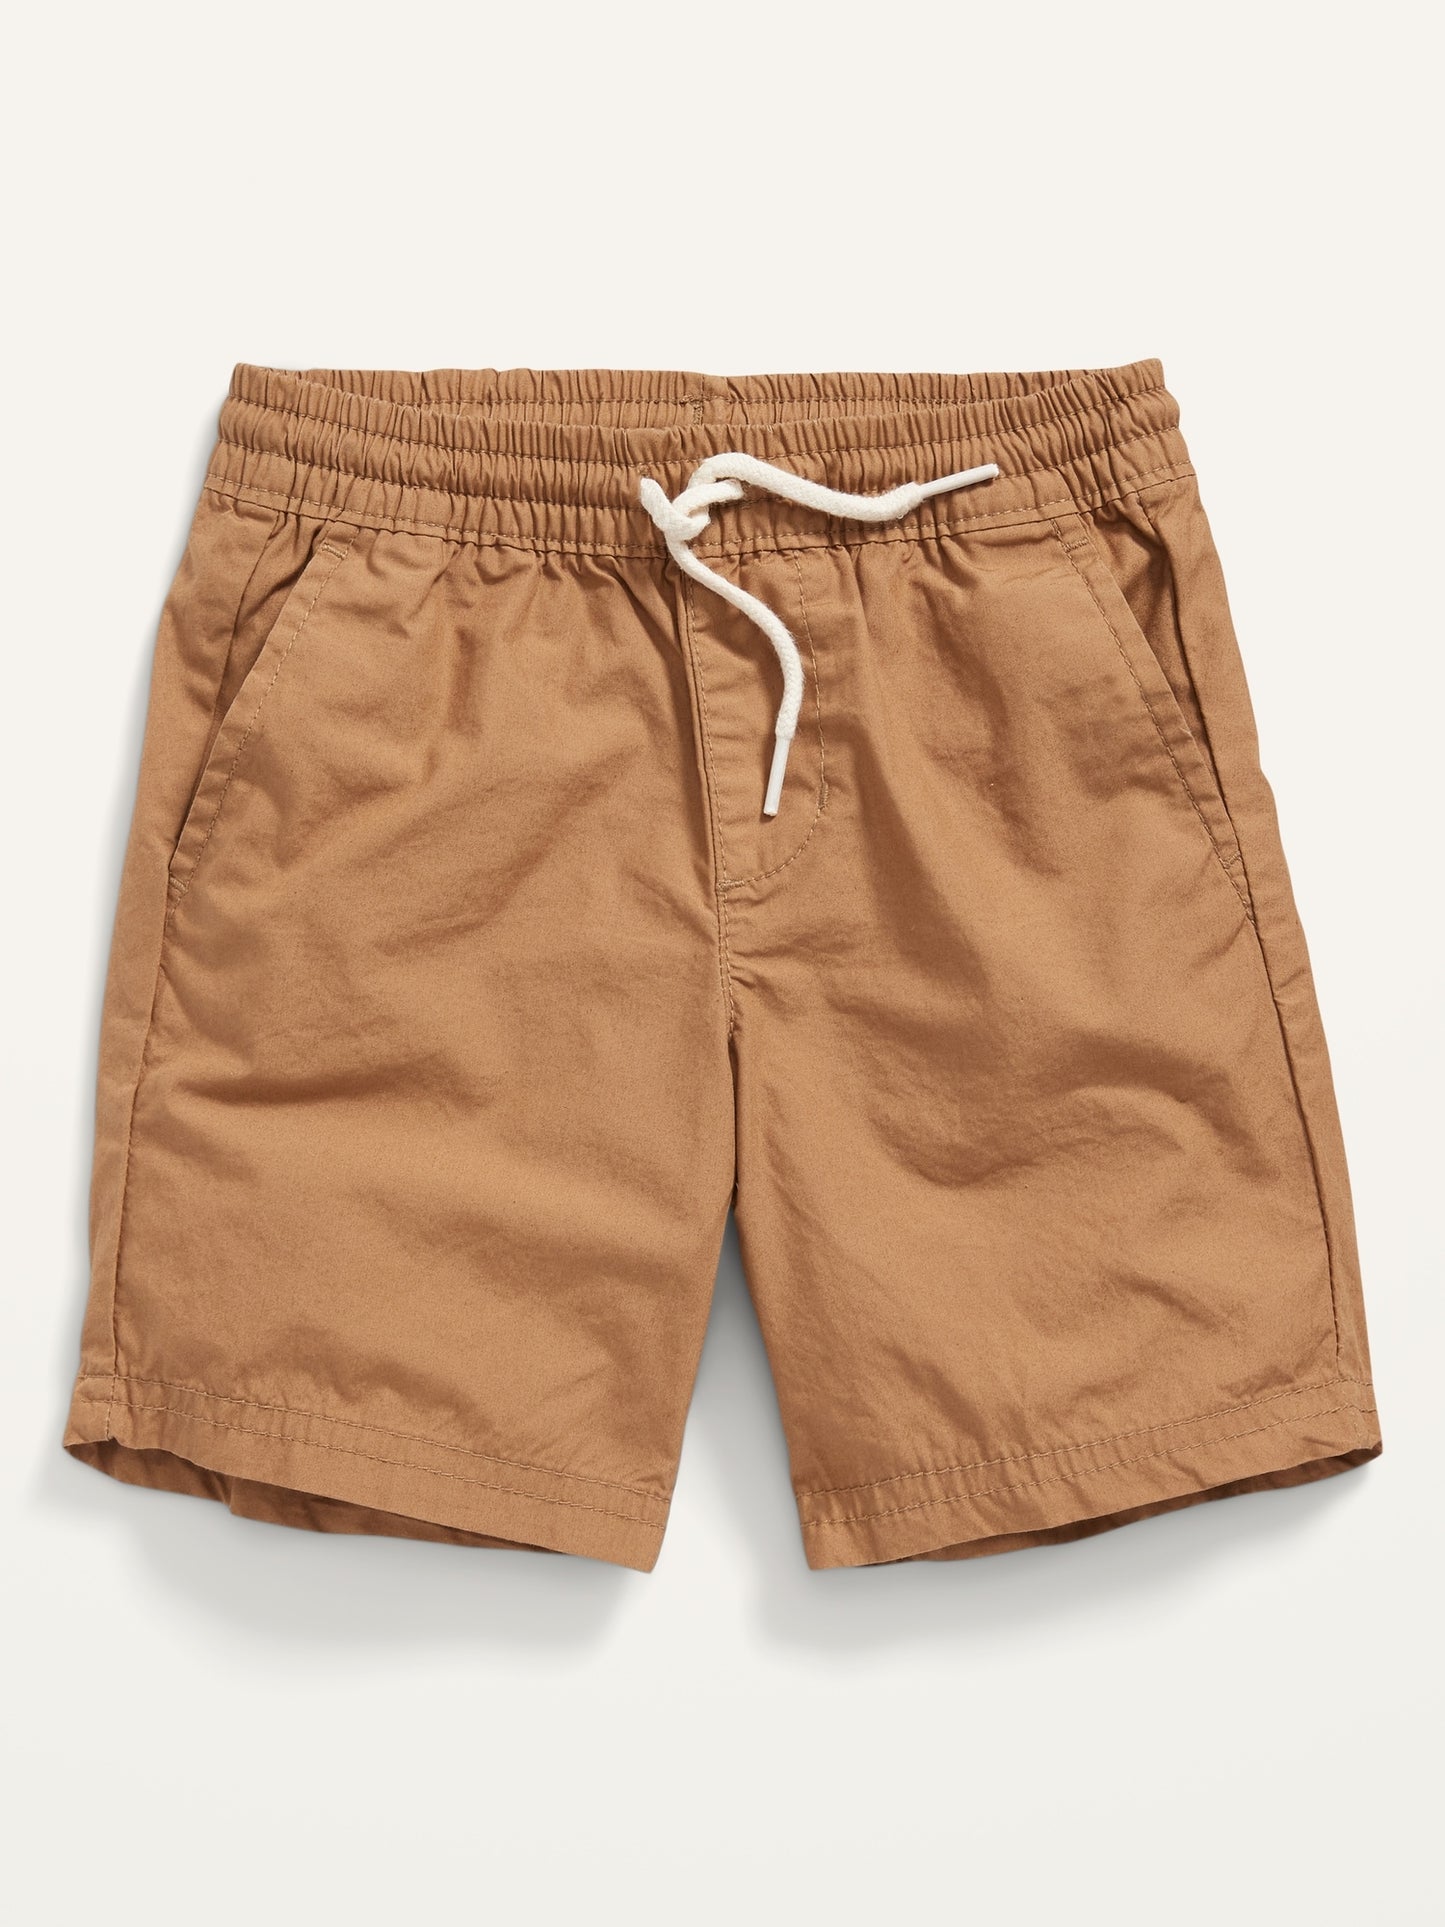 Unisex Cotton Poplin Pull-On Shorts for Toddler Ht Opp Solid Short Doe A Deer